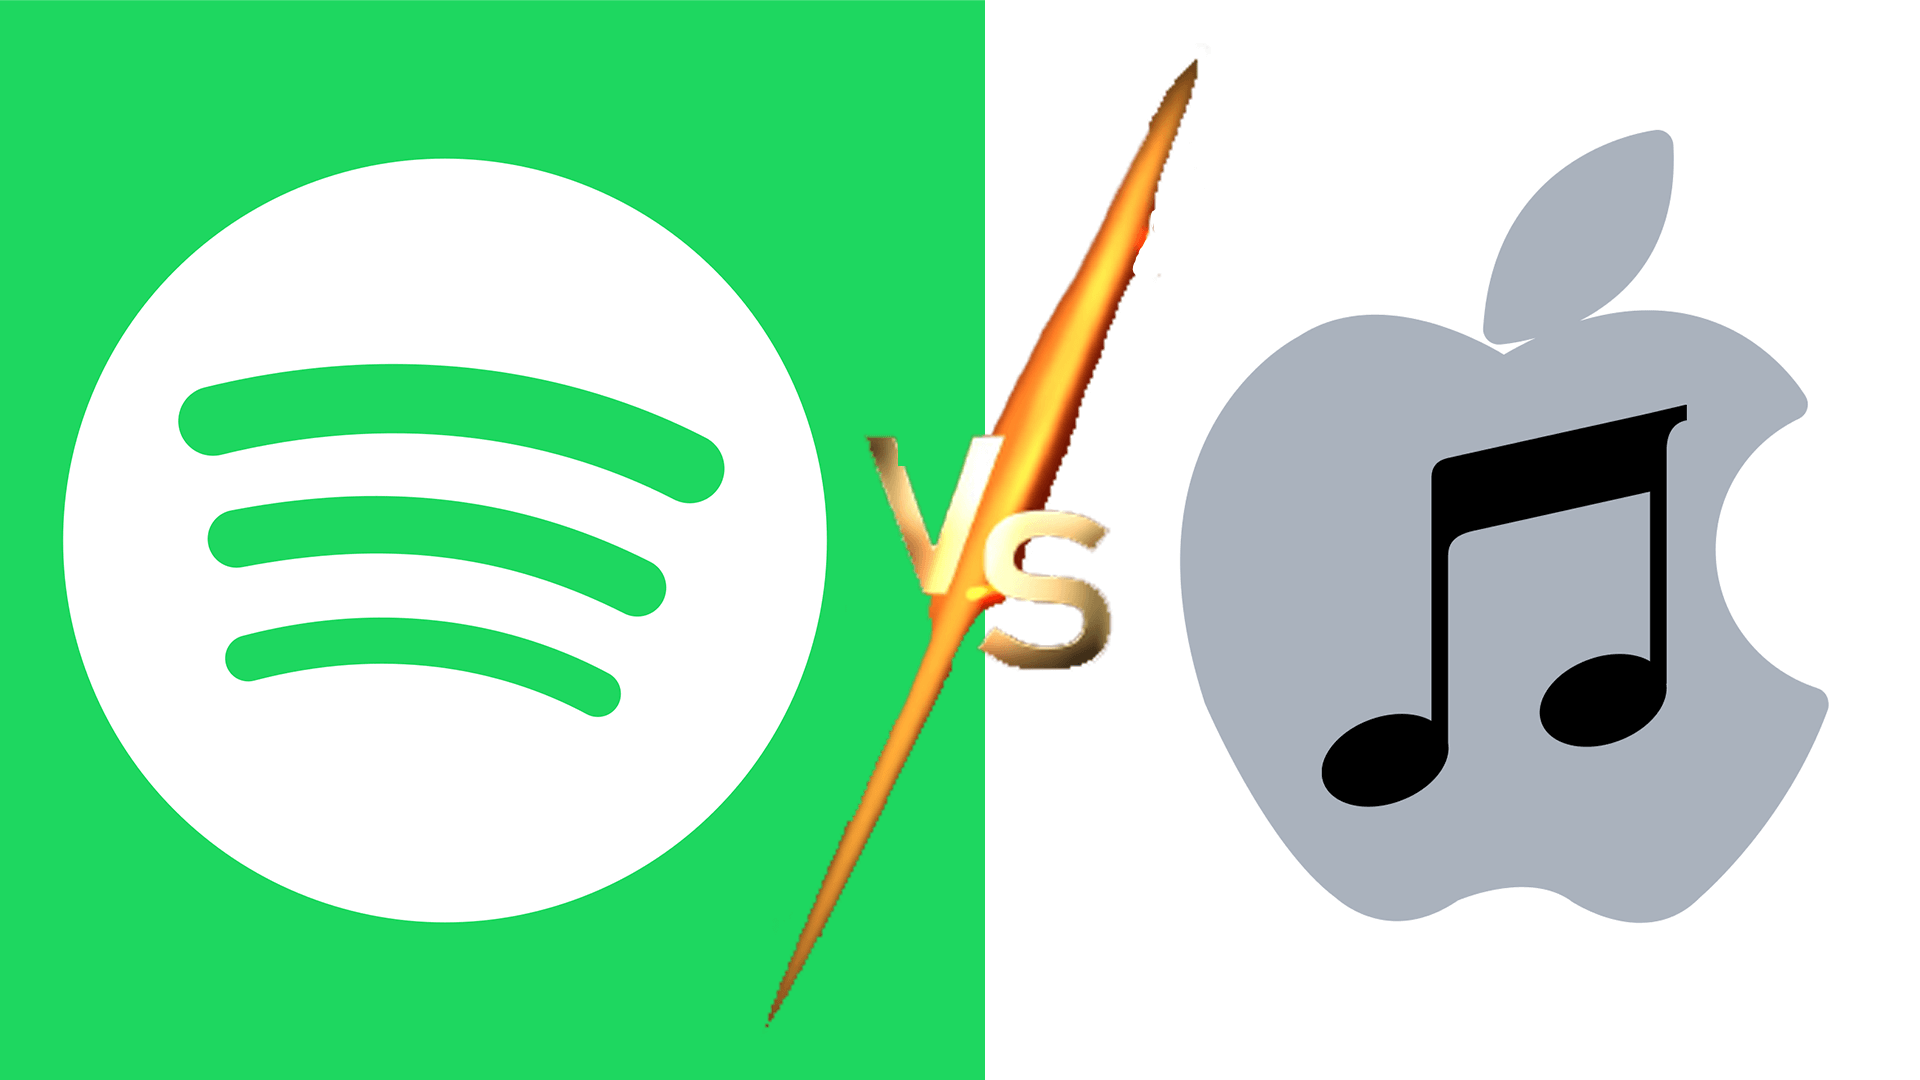 A musical dilemma: Spotify vs. Apple Music